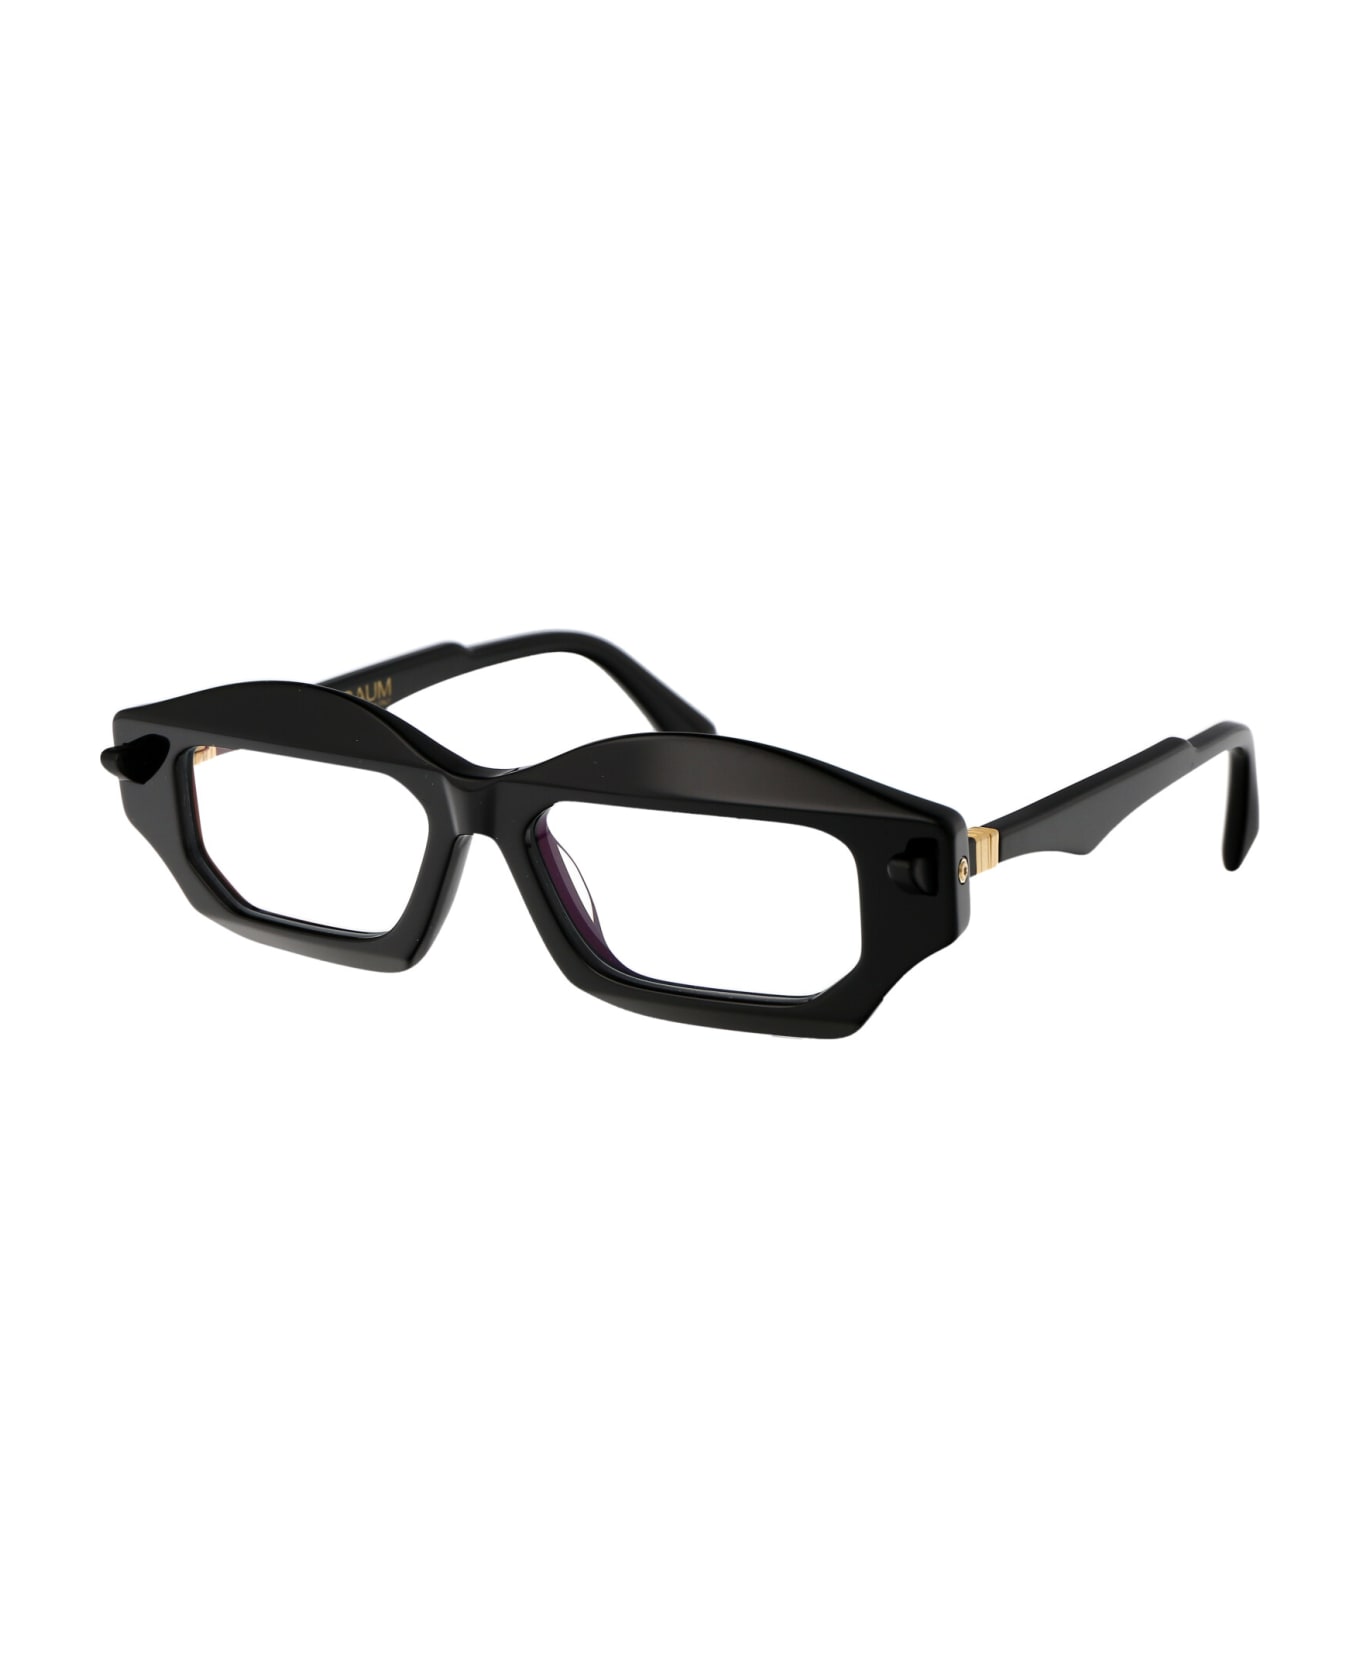 Kuboraum Maske T6 Sunglasses - VP 2grey サングラス